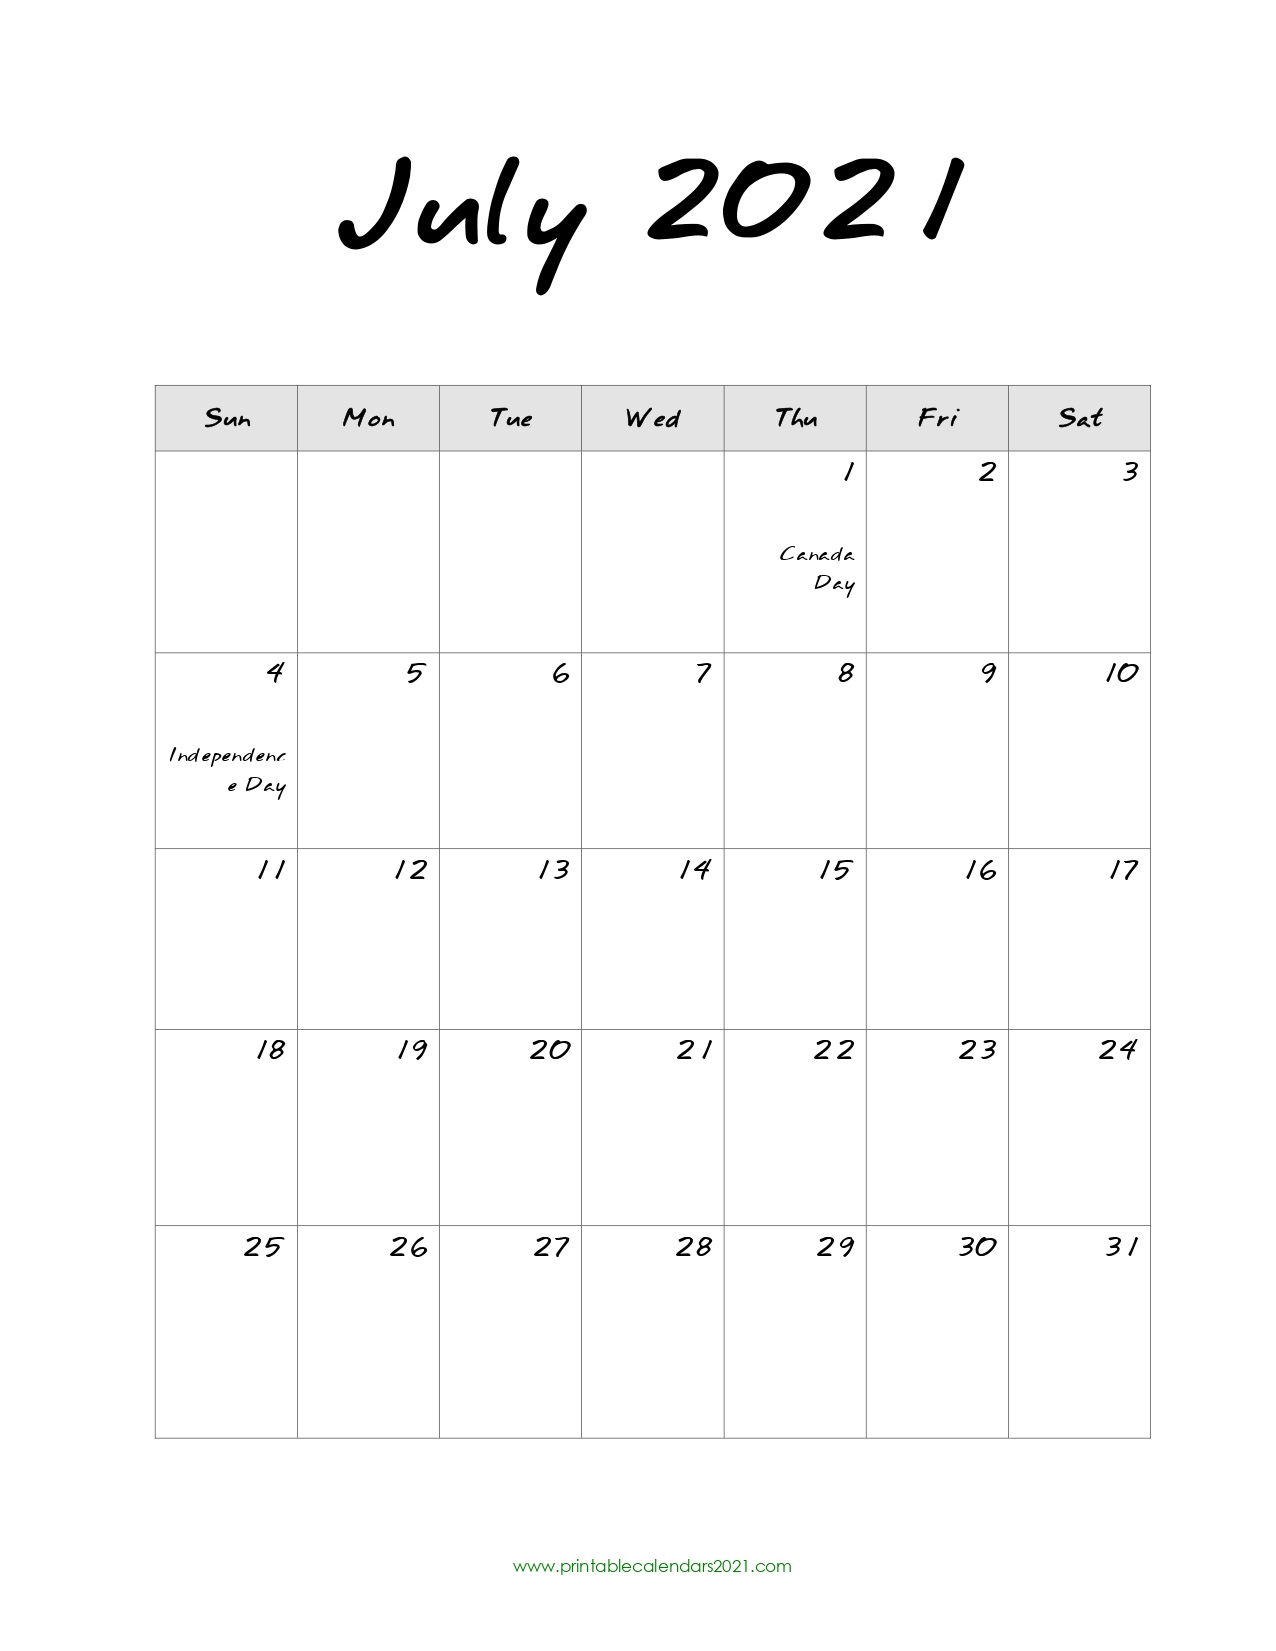 45+ July 2021 Calendar Printable, July 2021 Calendar Pdf General Blue December 2021 Calendar